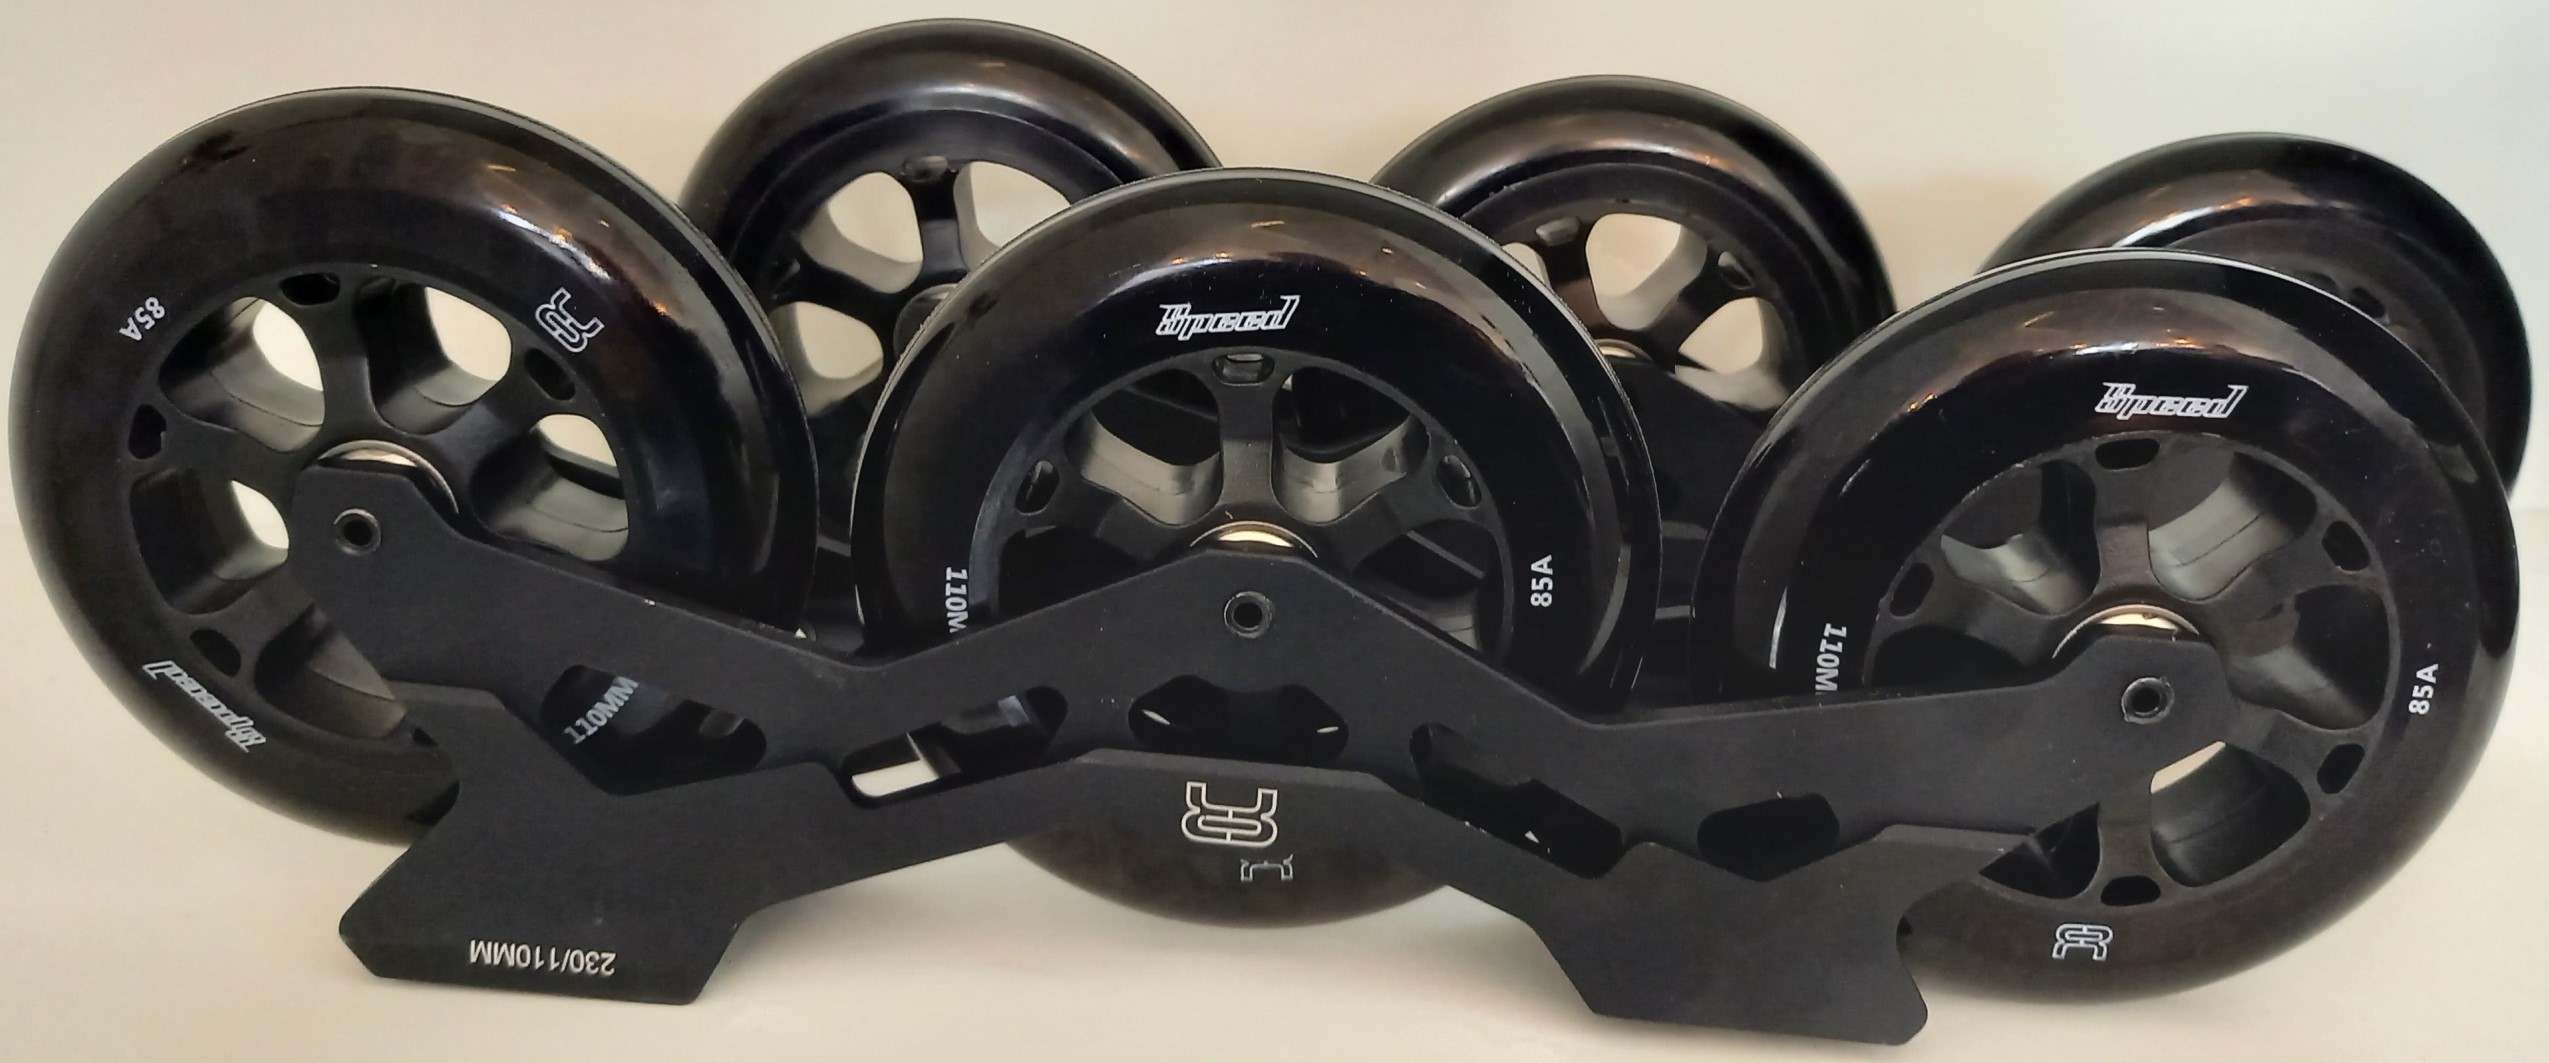 FR1 310 inline skate frame with black FR Urban Speed wheels and MW 9 Freeride bearings